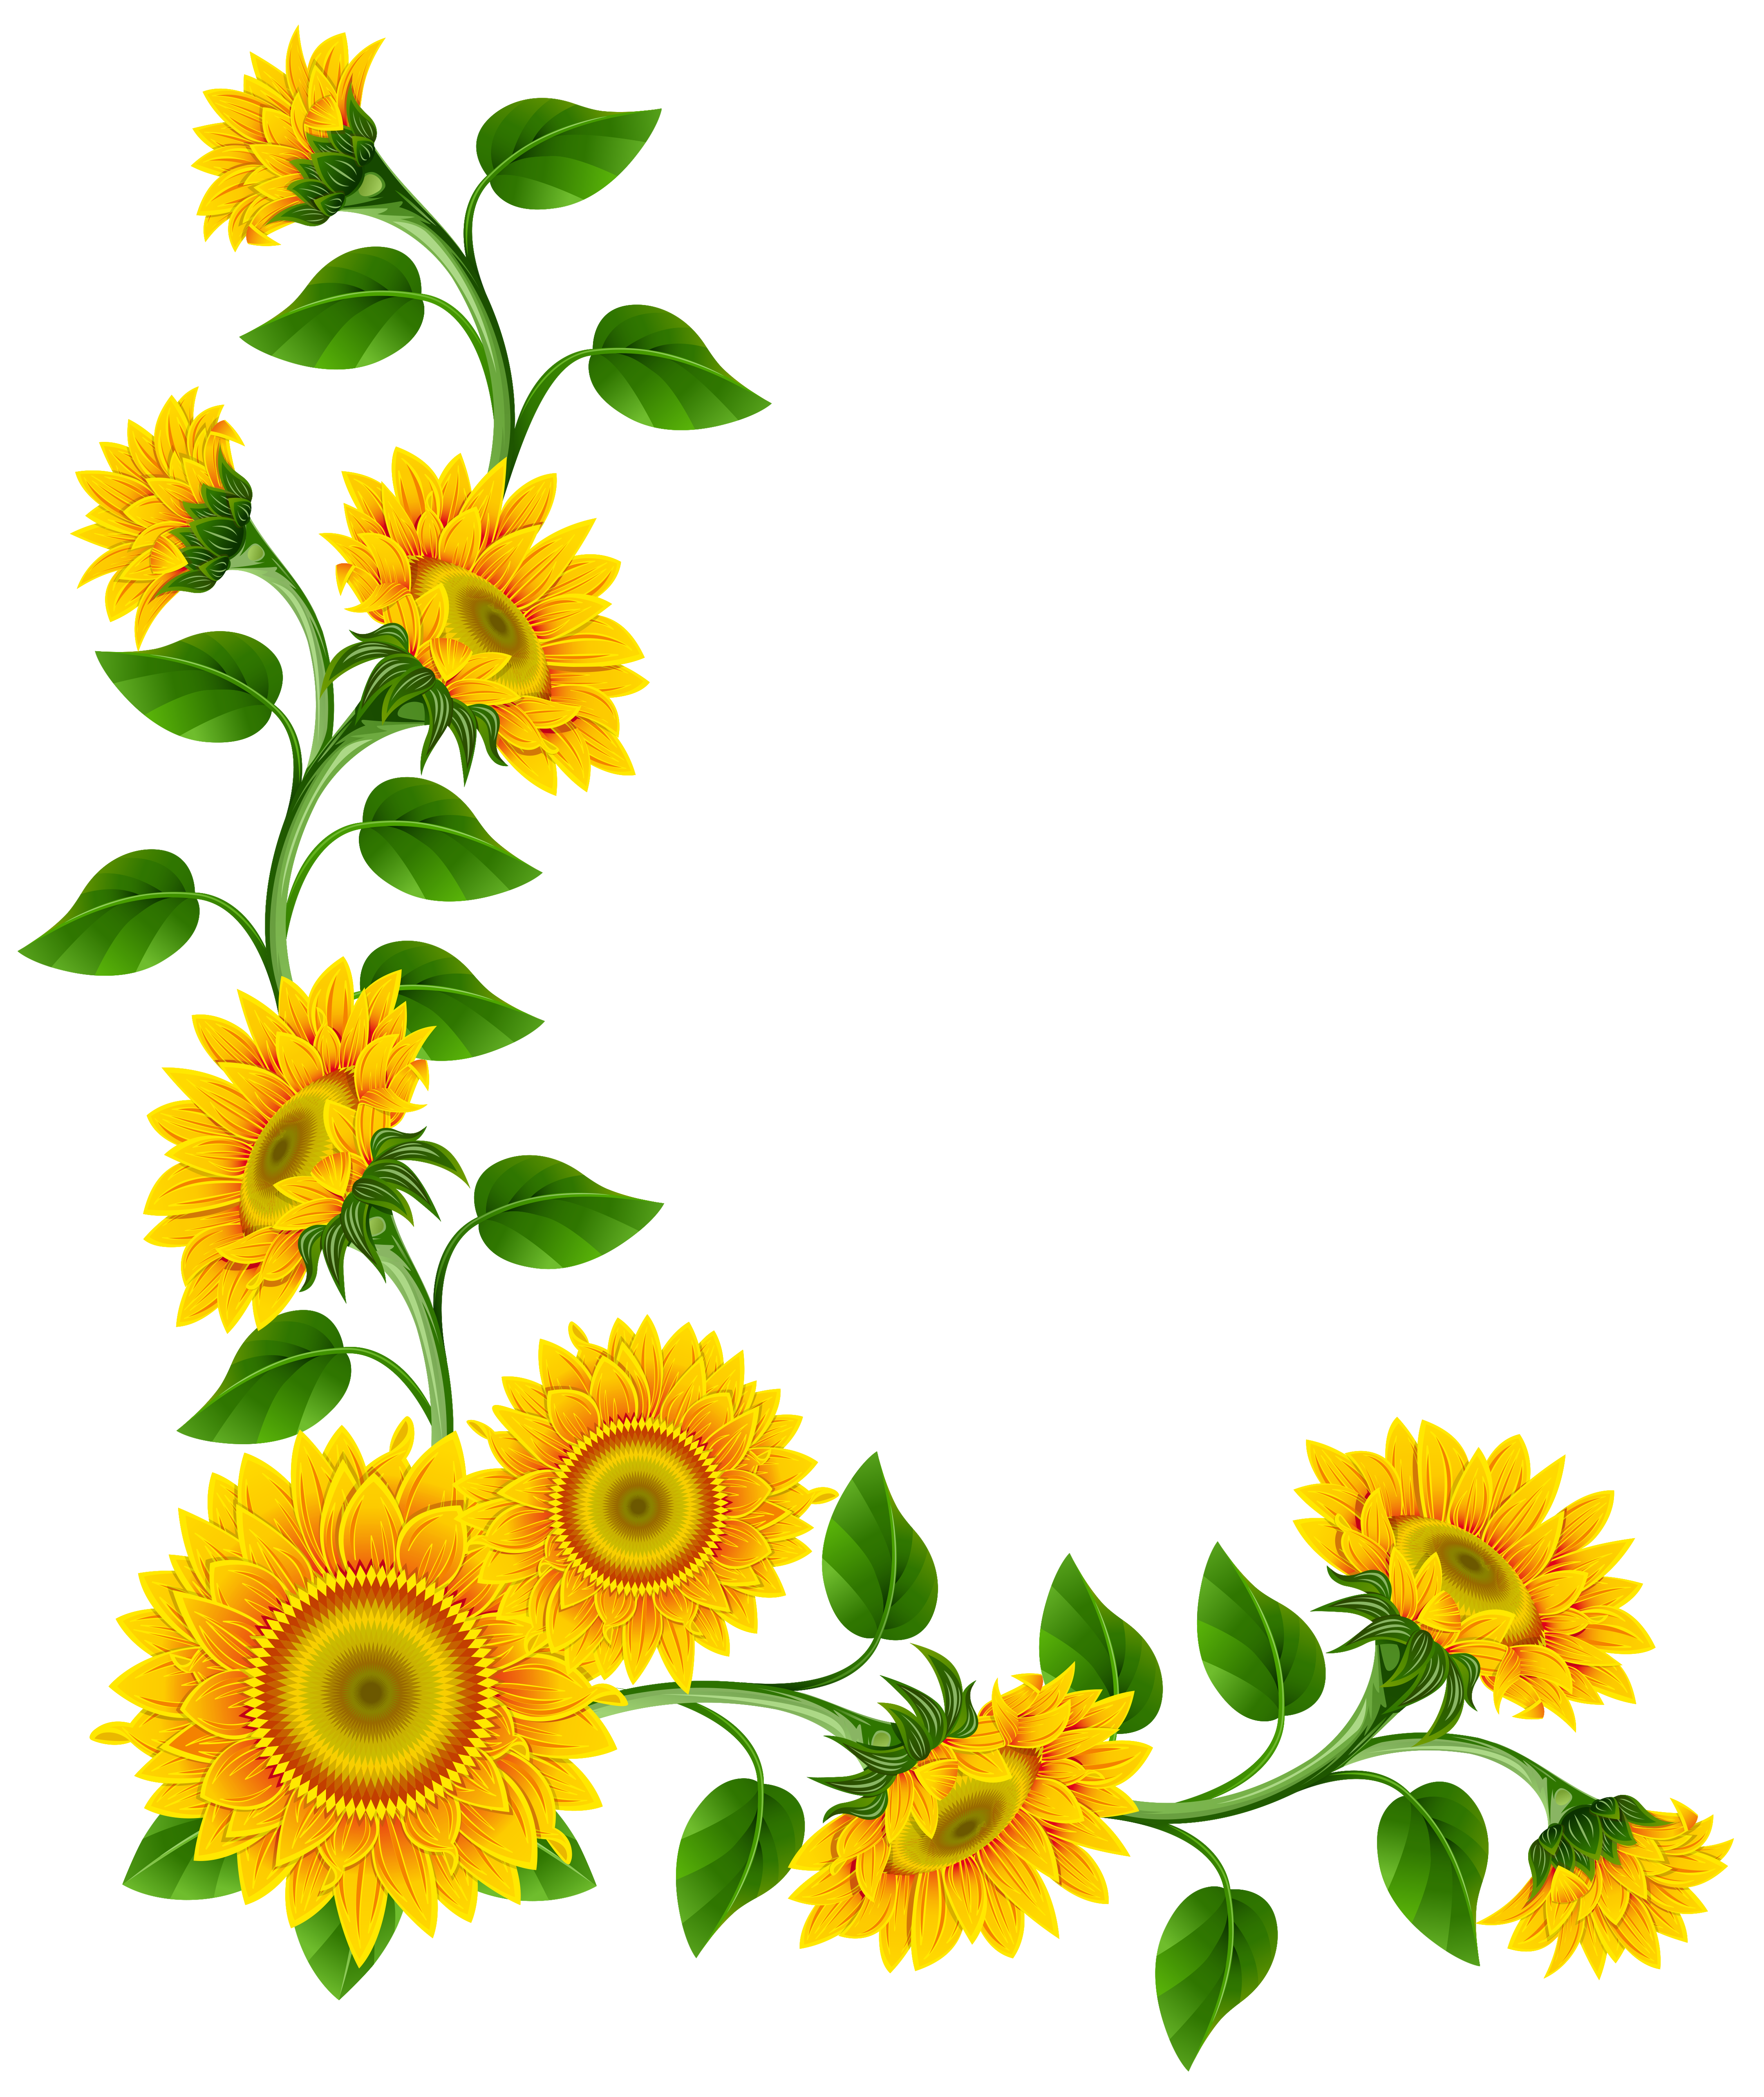 Daisies clipart corner border flower. Sunflower decoration png image